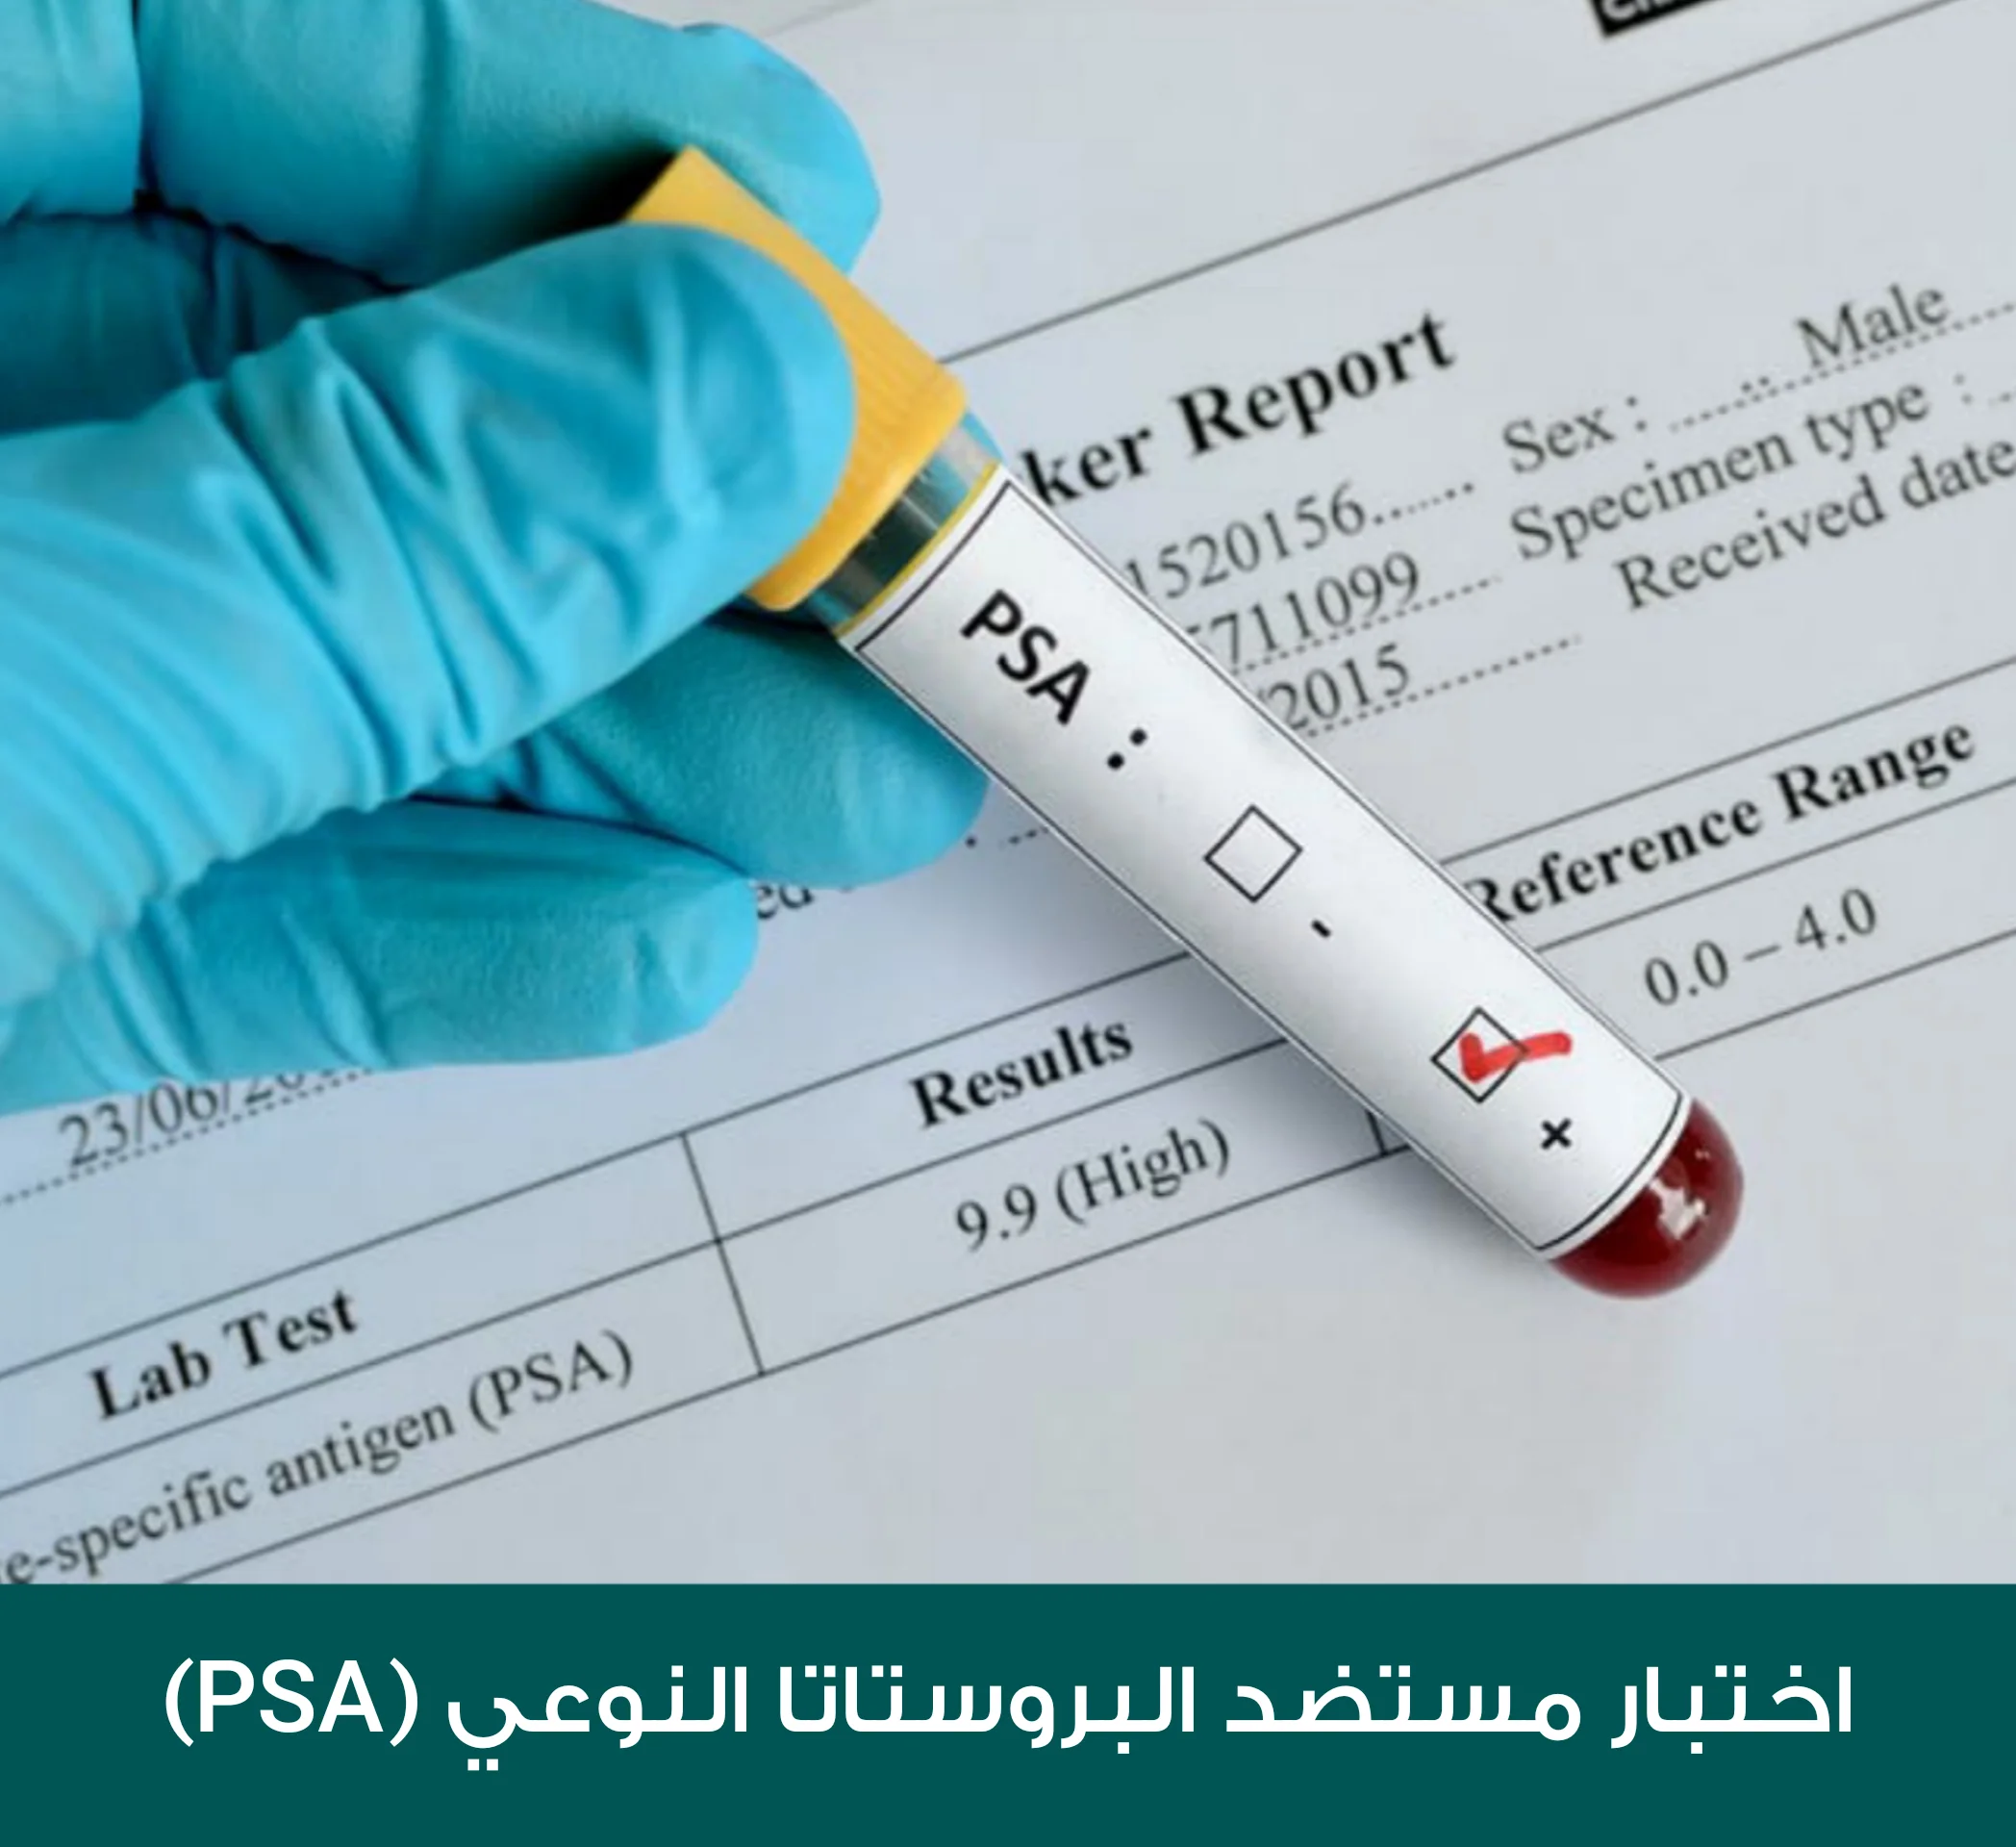 Prostata özgü antijen (PSA) test sonucu